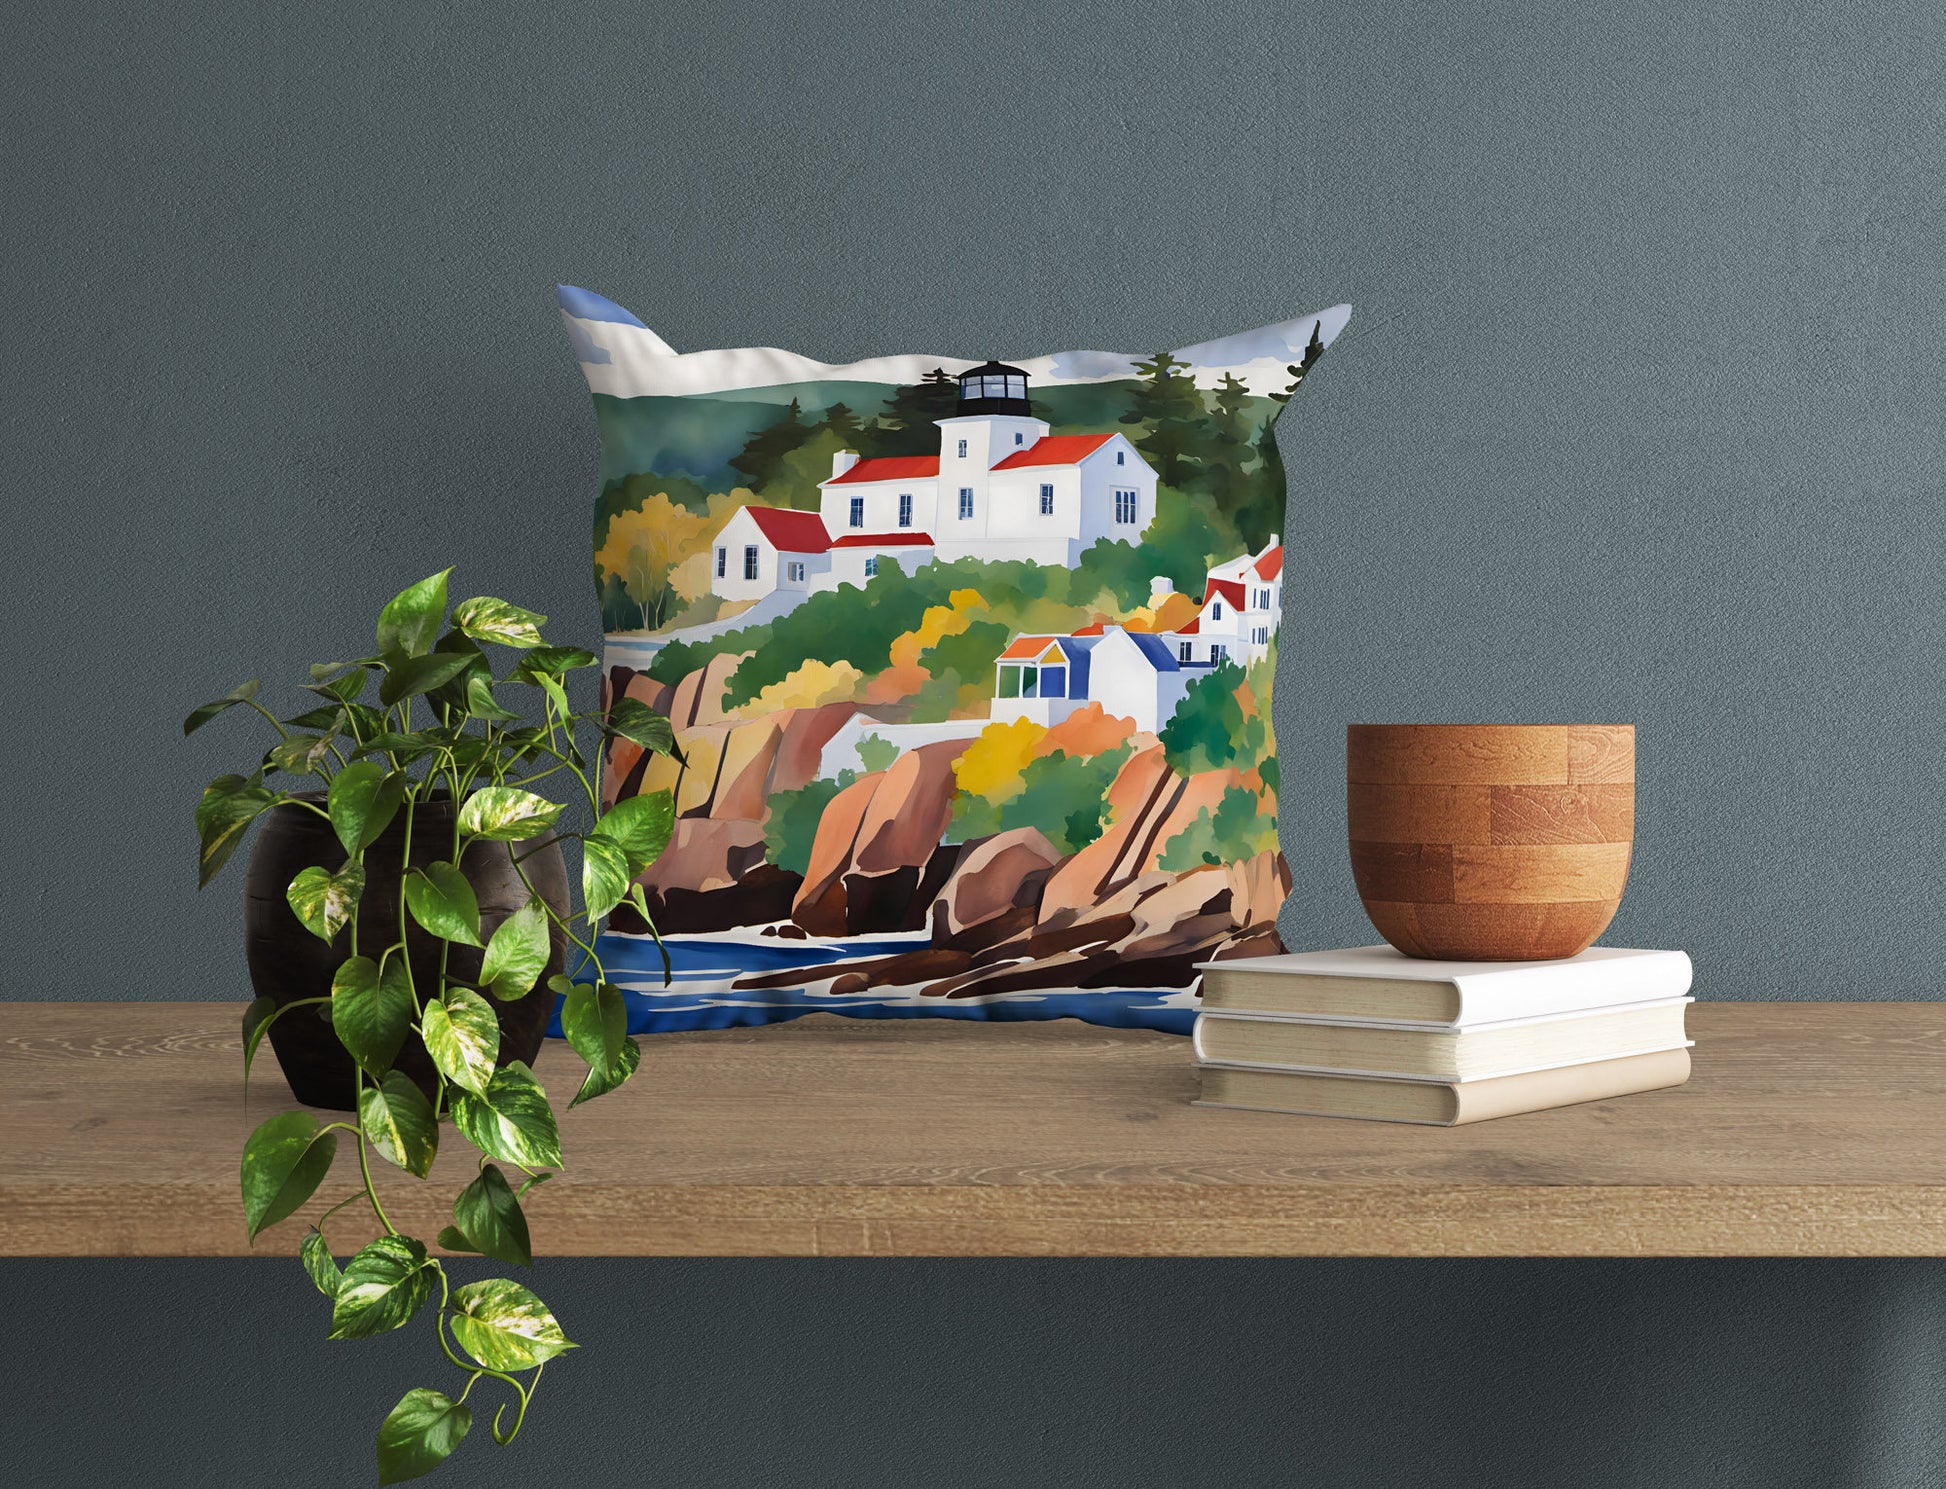 Acadia National Park, Maine Toss Pillow, Usa Travel Pillow, Art Pillow, Fashion, 18 X 18 Pillow Covers, Housewarming Gift, Sofa Pillows